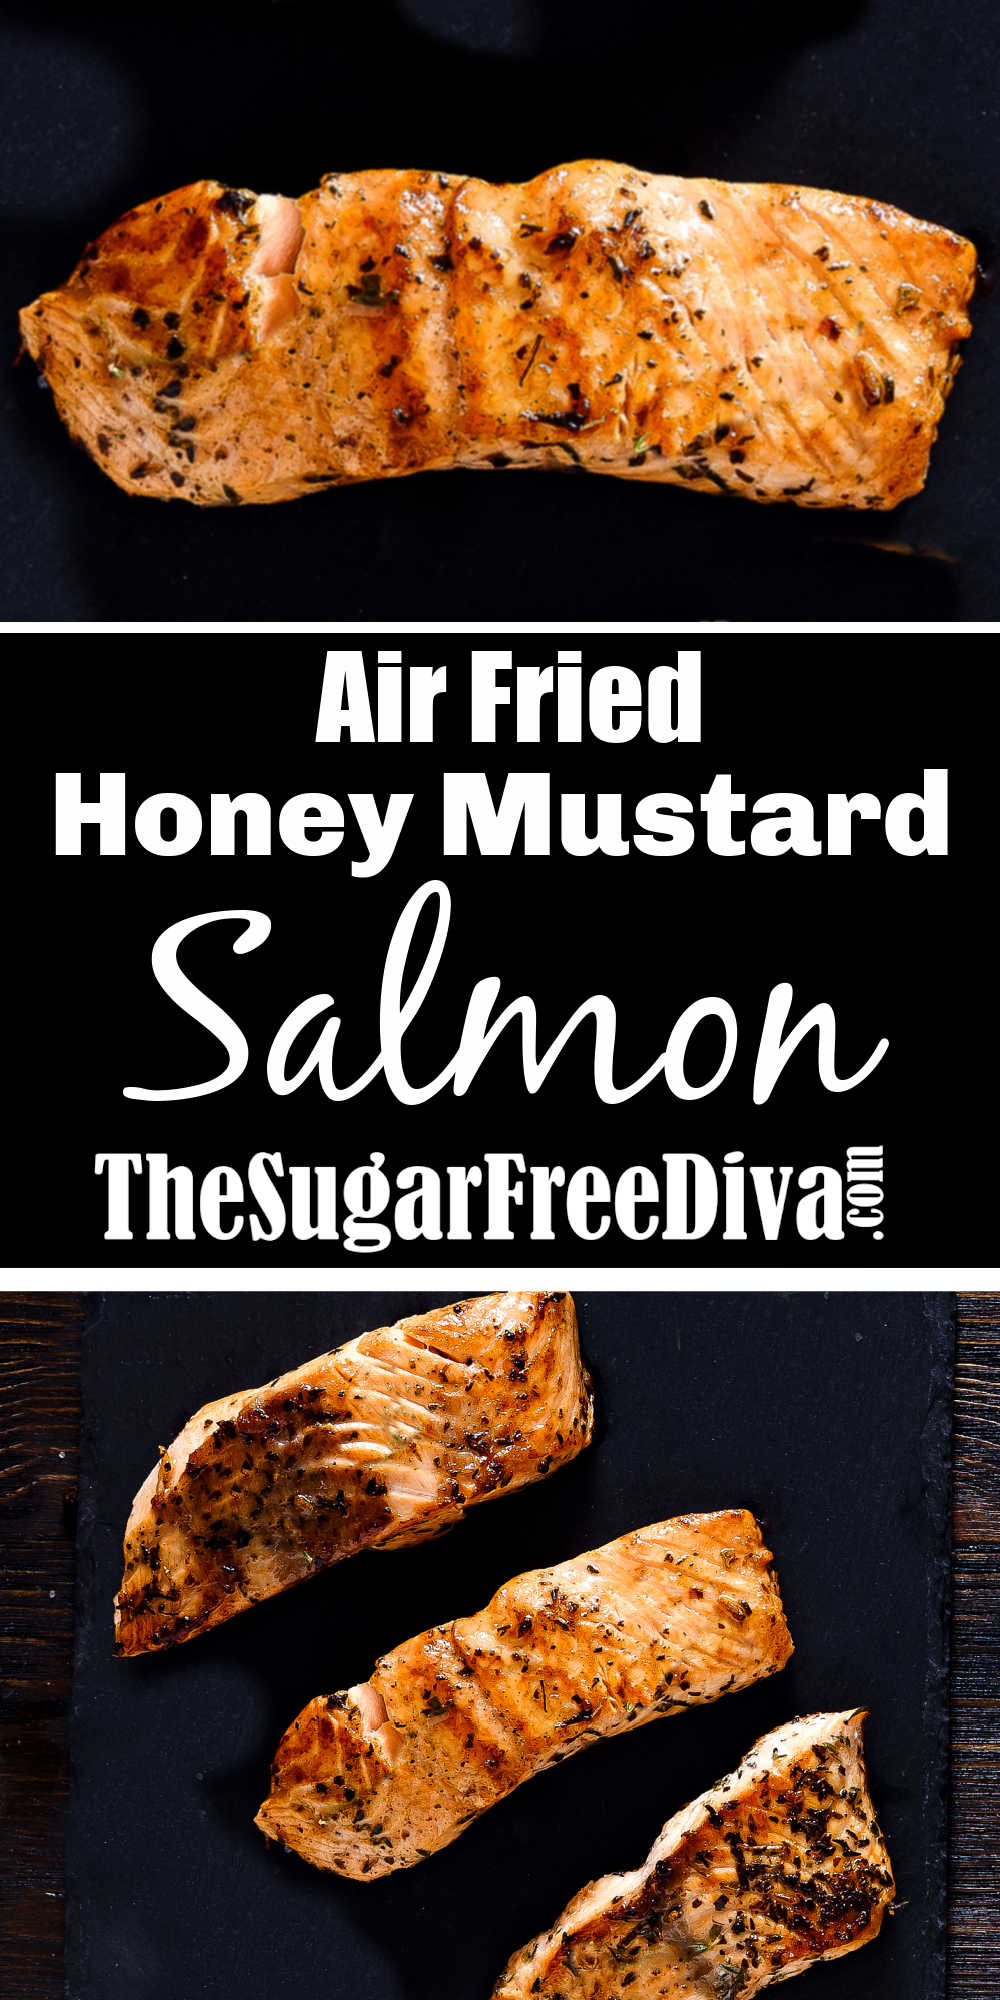 Air Fried Honey Mustard Salmon